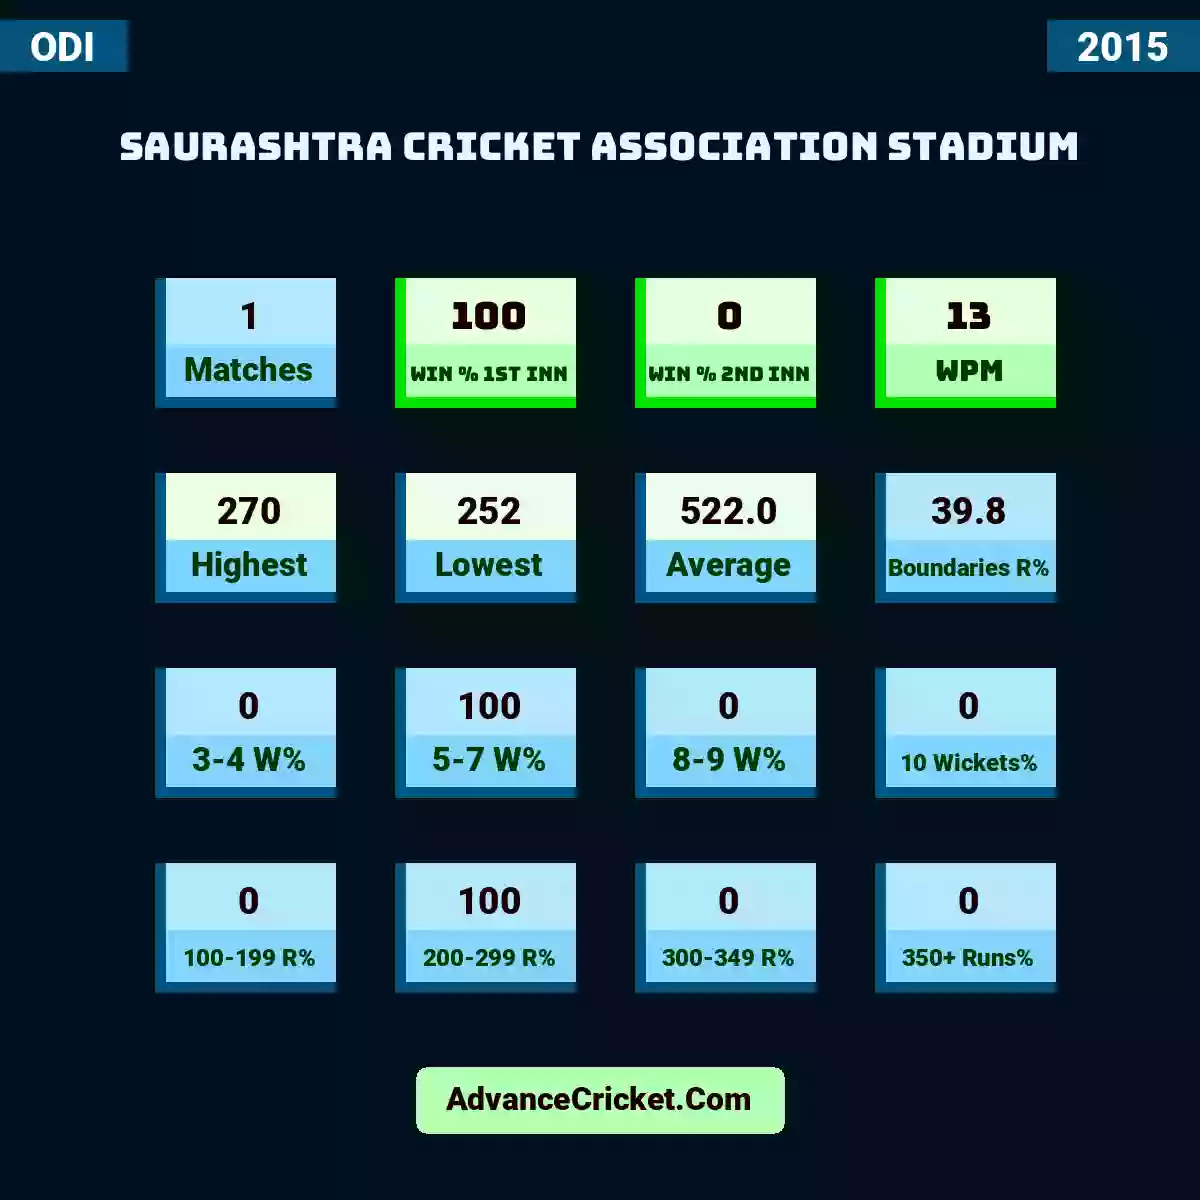 Image showing Saurashtra Cricket Association Stadium with Matches: 1, Win % 1st Inn: 100, Win % 2nd Inn: 0, WPM: 13, Highest: 270, Lowest: 252, Average: 522.0, Boundaries R%: 39.8, 3-4 W%: 0, 5-7 W%: 100, 8-9 W%: 0, 10 Wickets%: 0, 100-199 R%: 0, 200-299 R%: 100, 300-349 R%: 0, 350+ Runs%: 0.